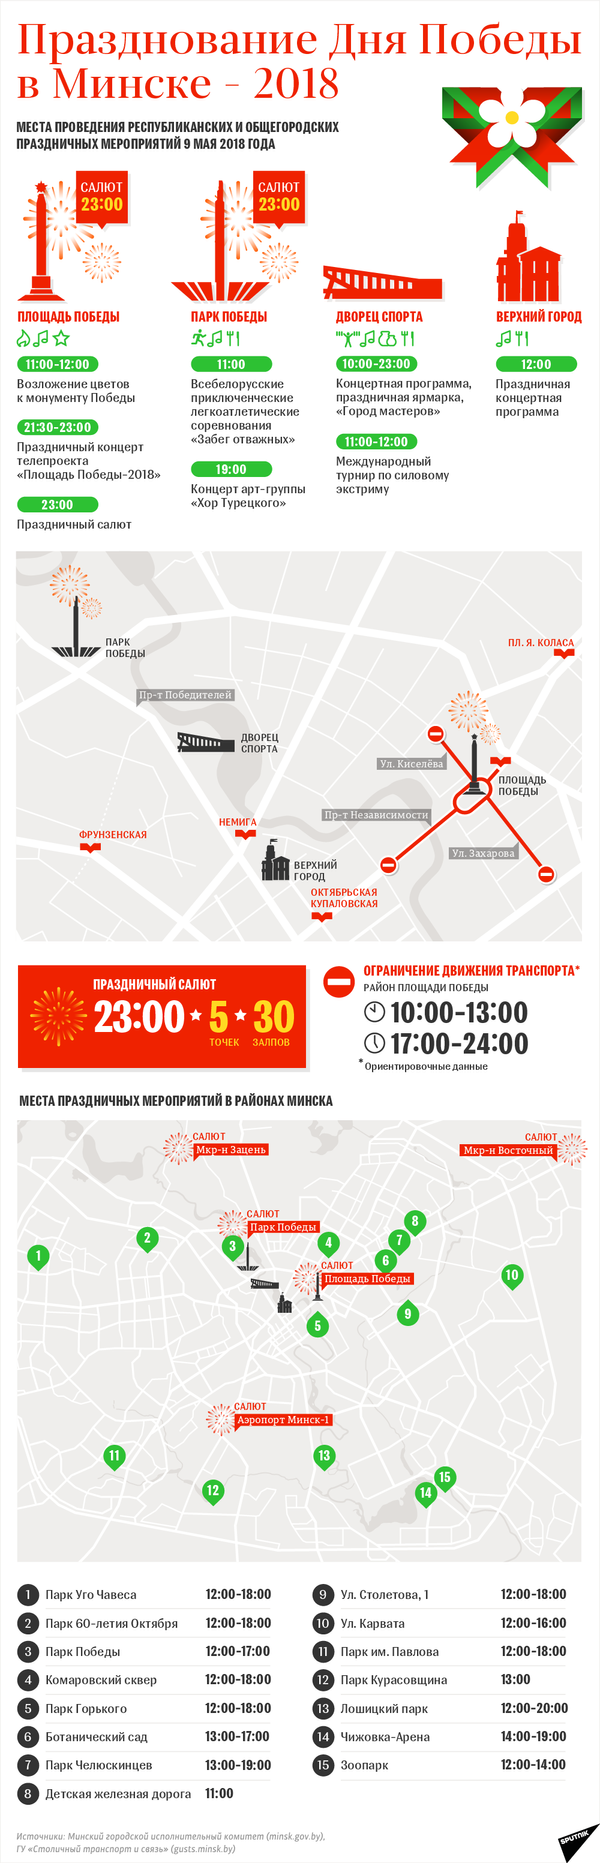 Празднование Дня Победы в Минске 2018 – инфографика на sputnik.by - Sputnik Беларусь